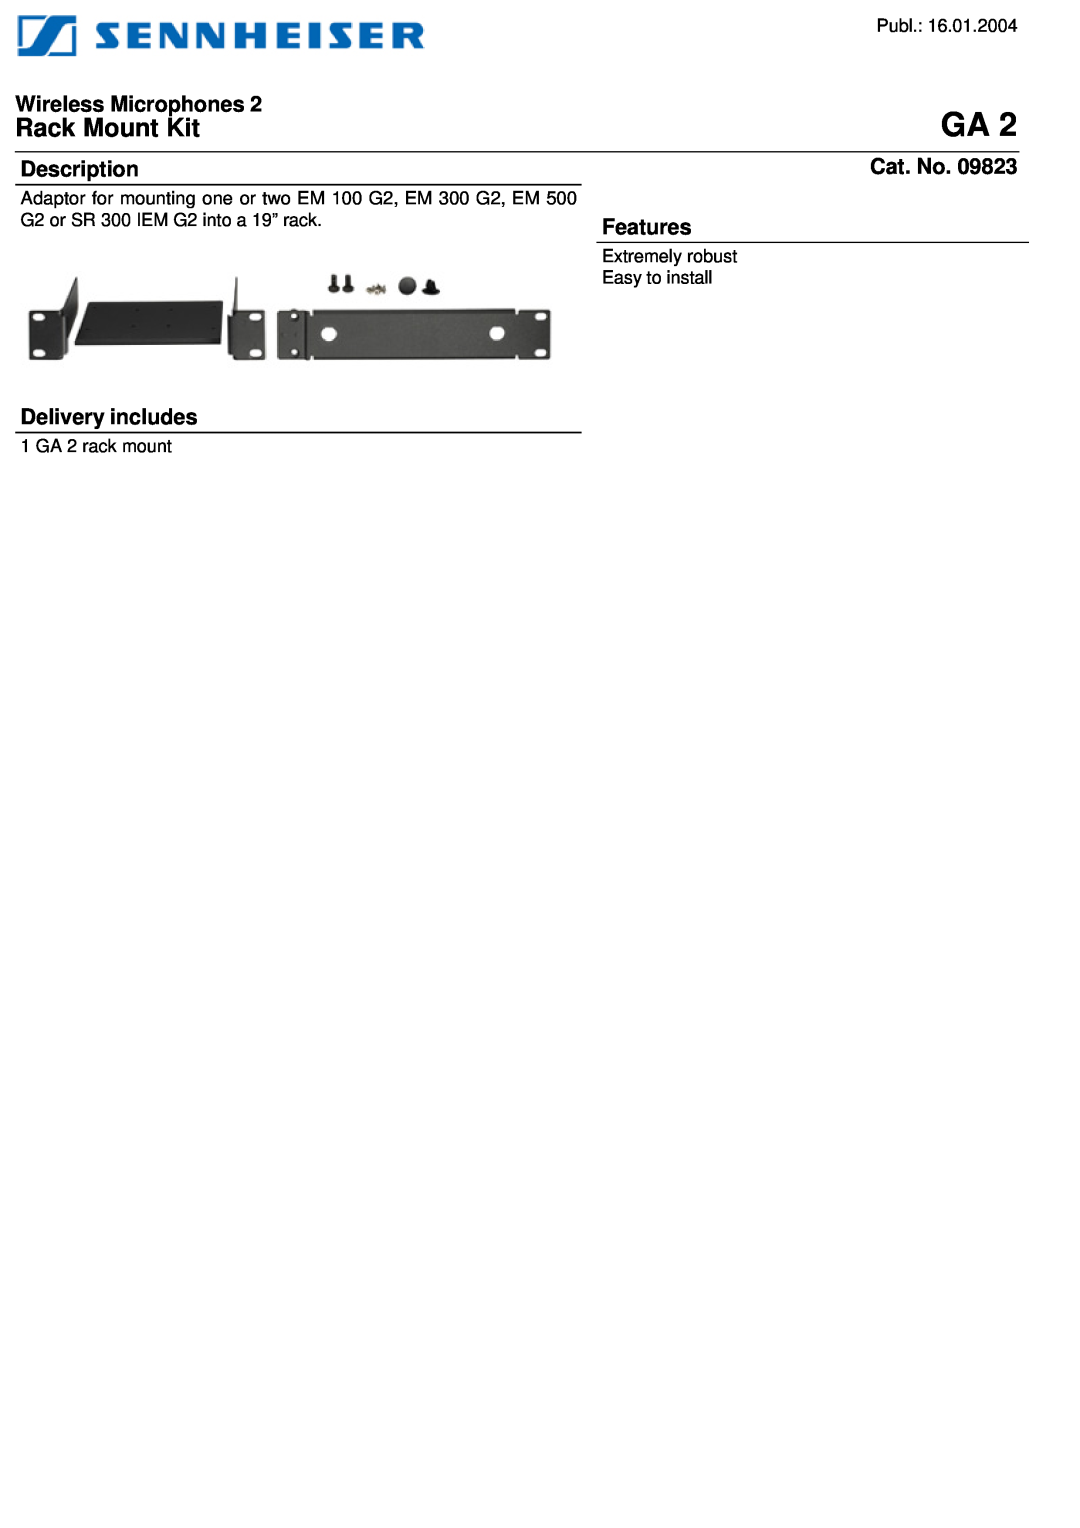 Sennheiser GA 2 manual Rack Mount Kit, Wireless Microphones, Description, Cat. No, Features, Delivery includes, Publ 